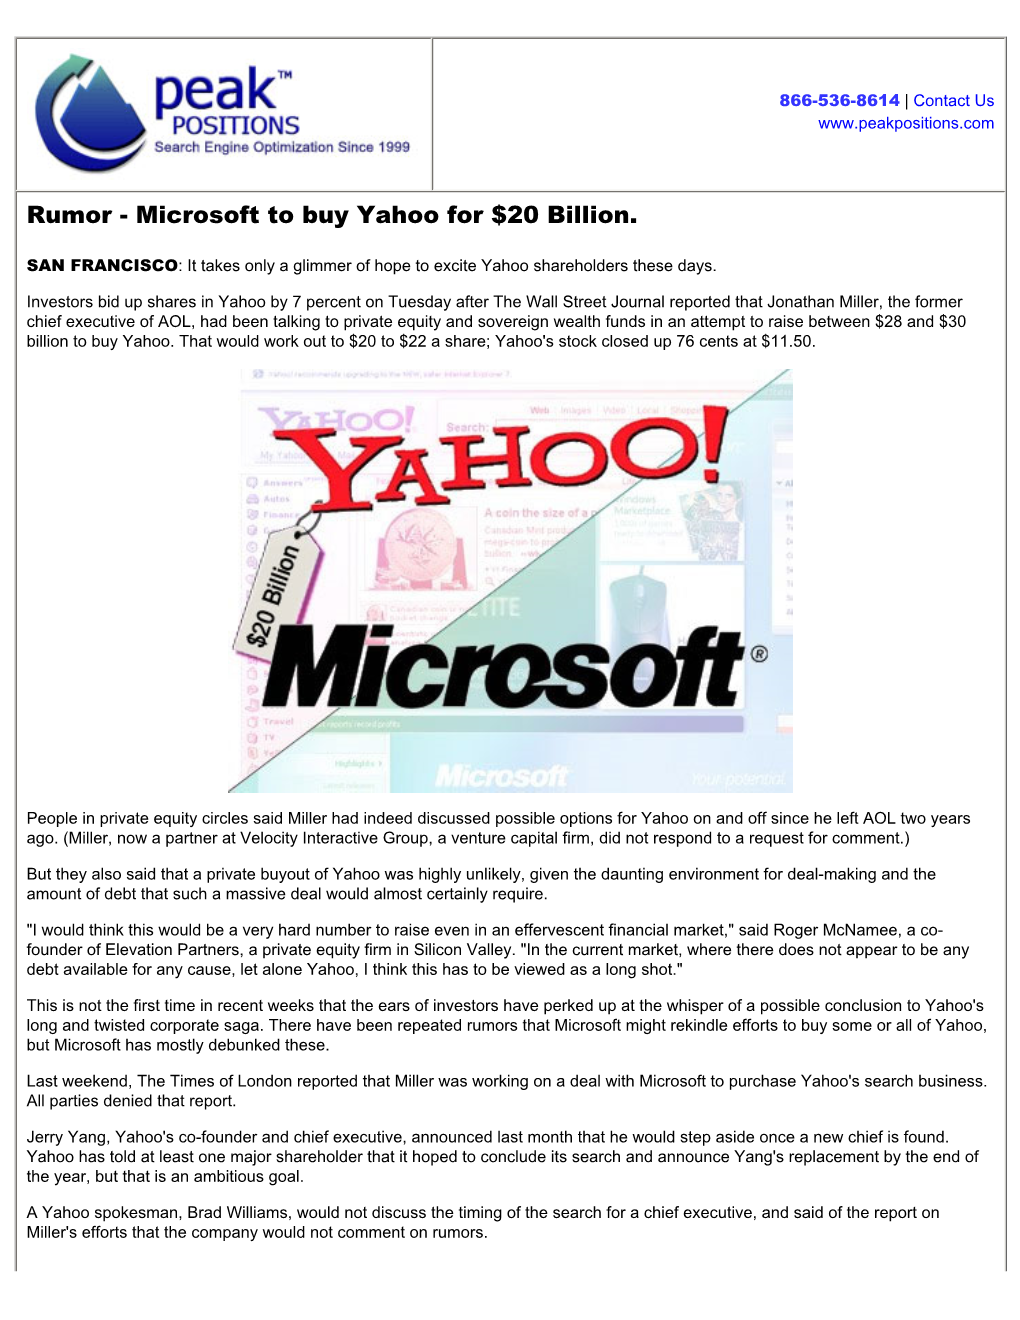 Rumor - Microsoft to Buy Yahoo for $20 Billion